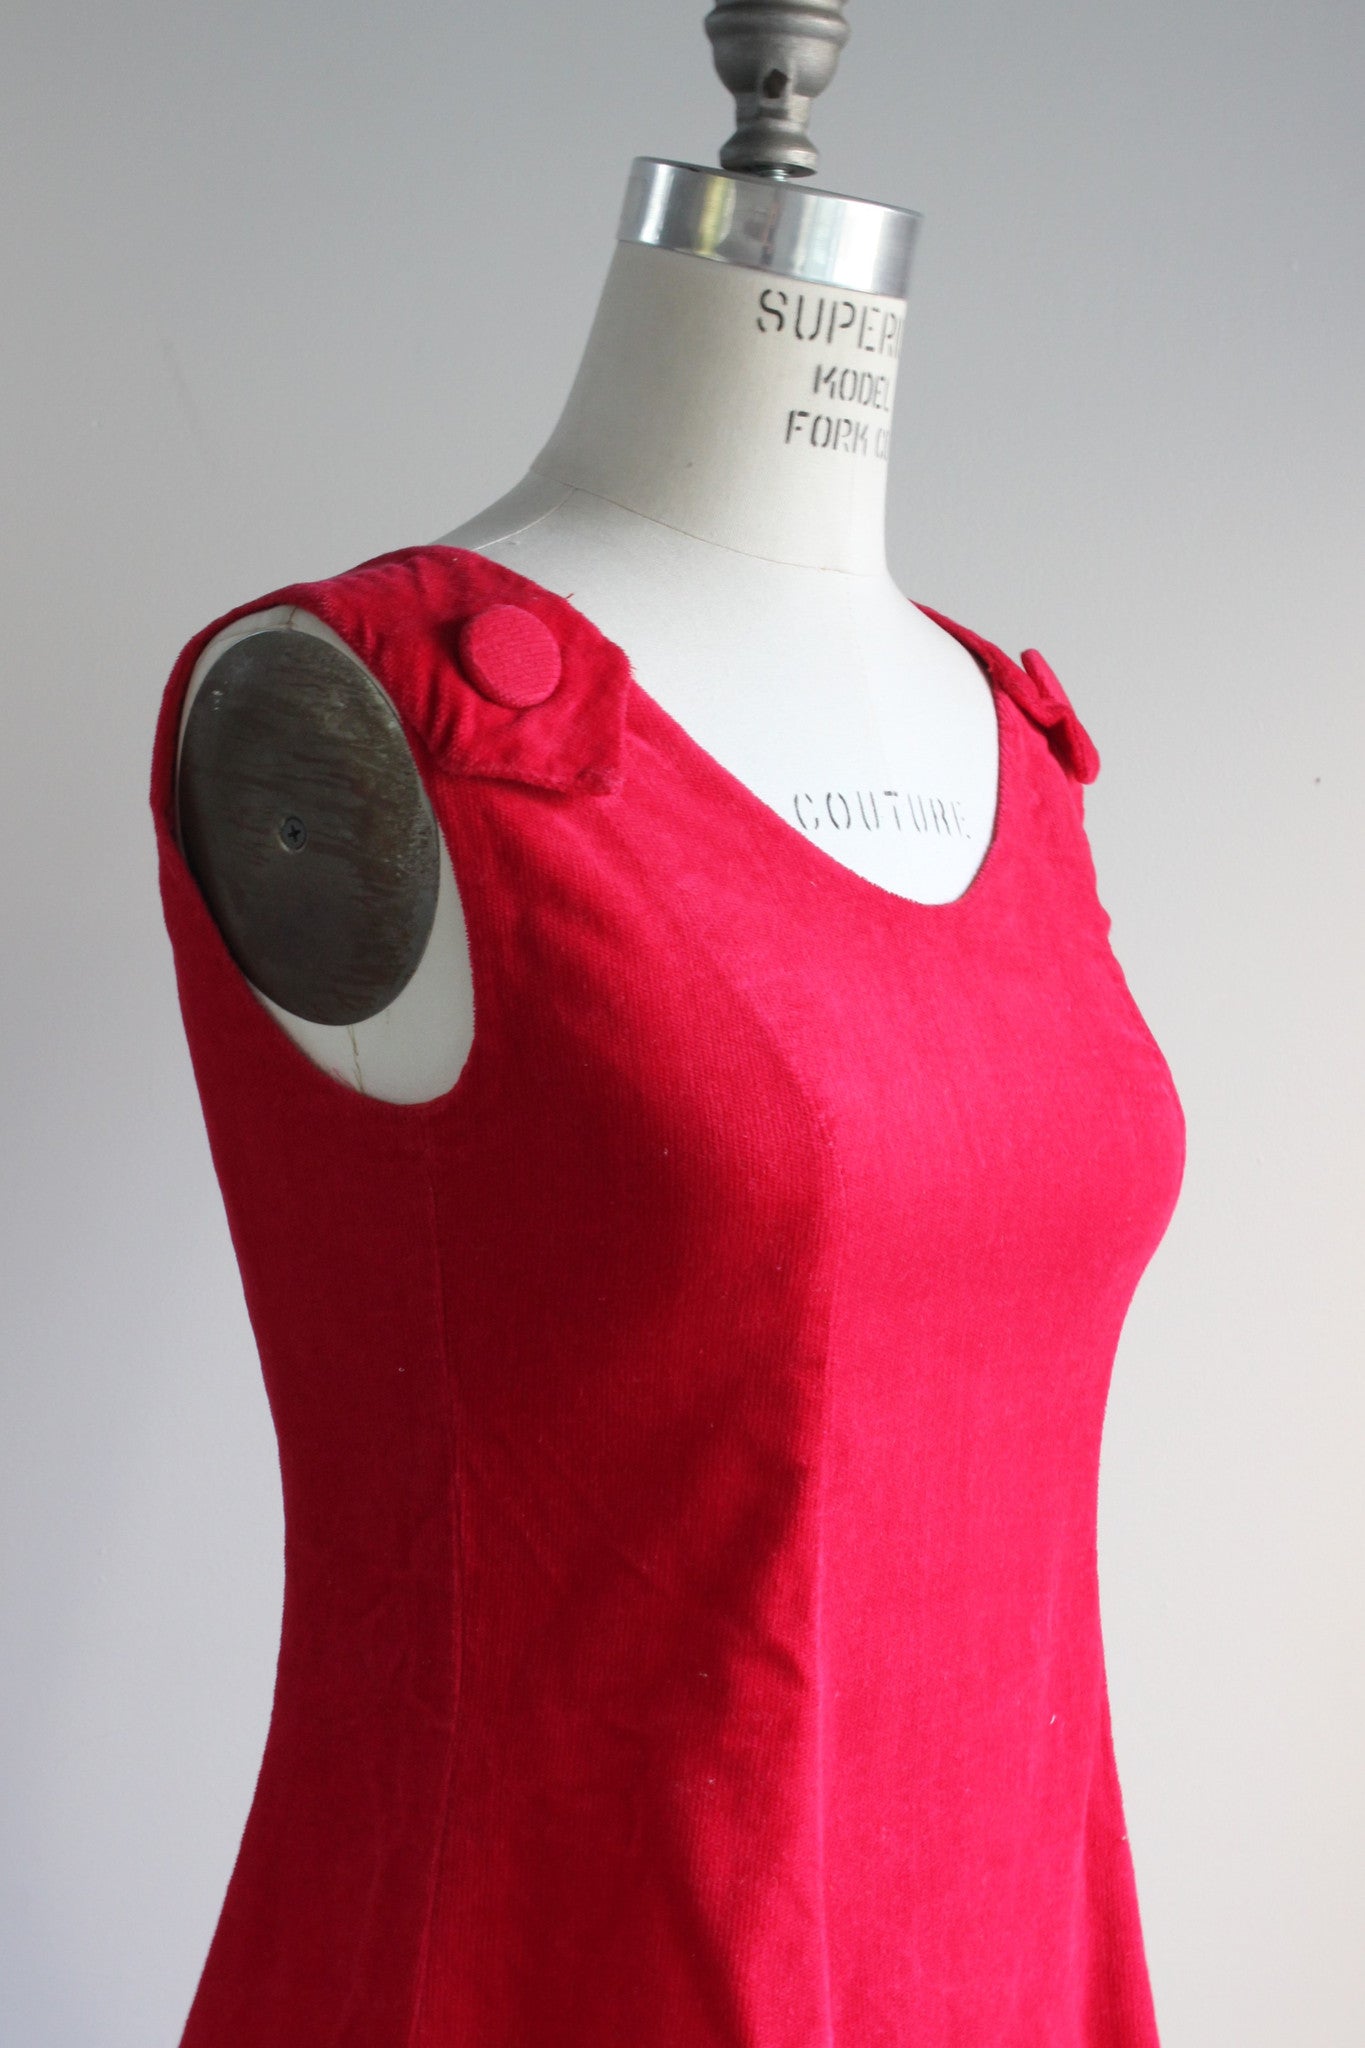 Vintage 1960s Red Corduroy Dress